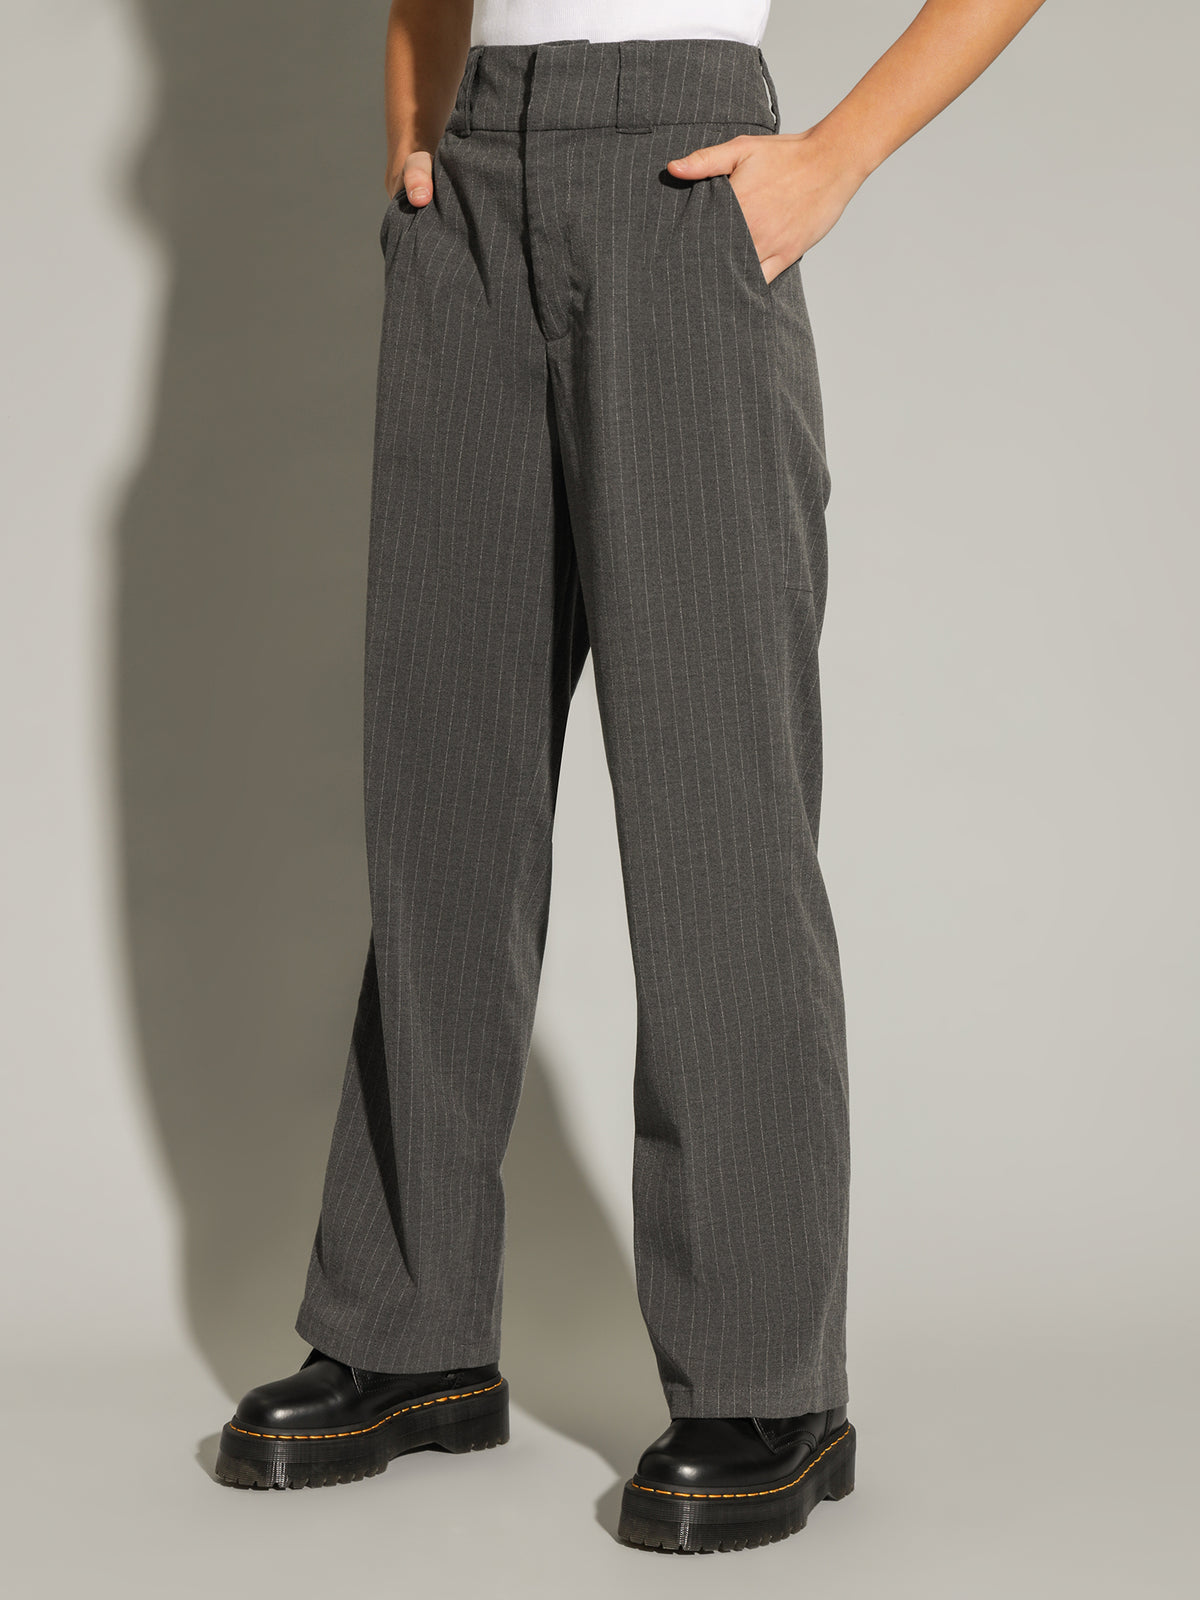 Danny Pinstripe Pants in Grey